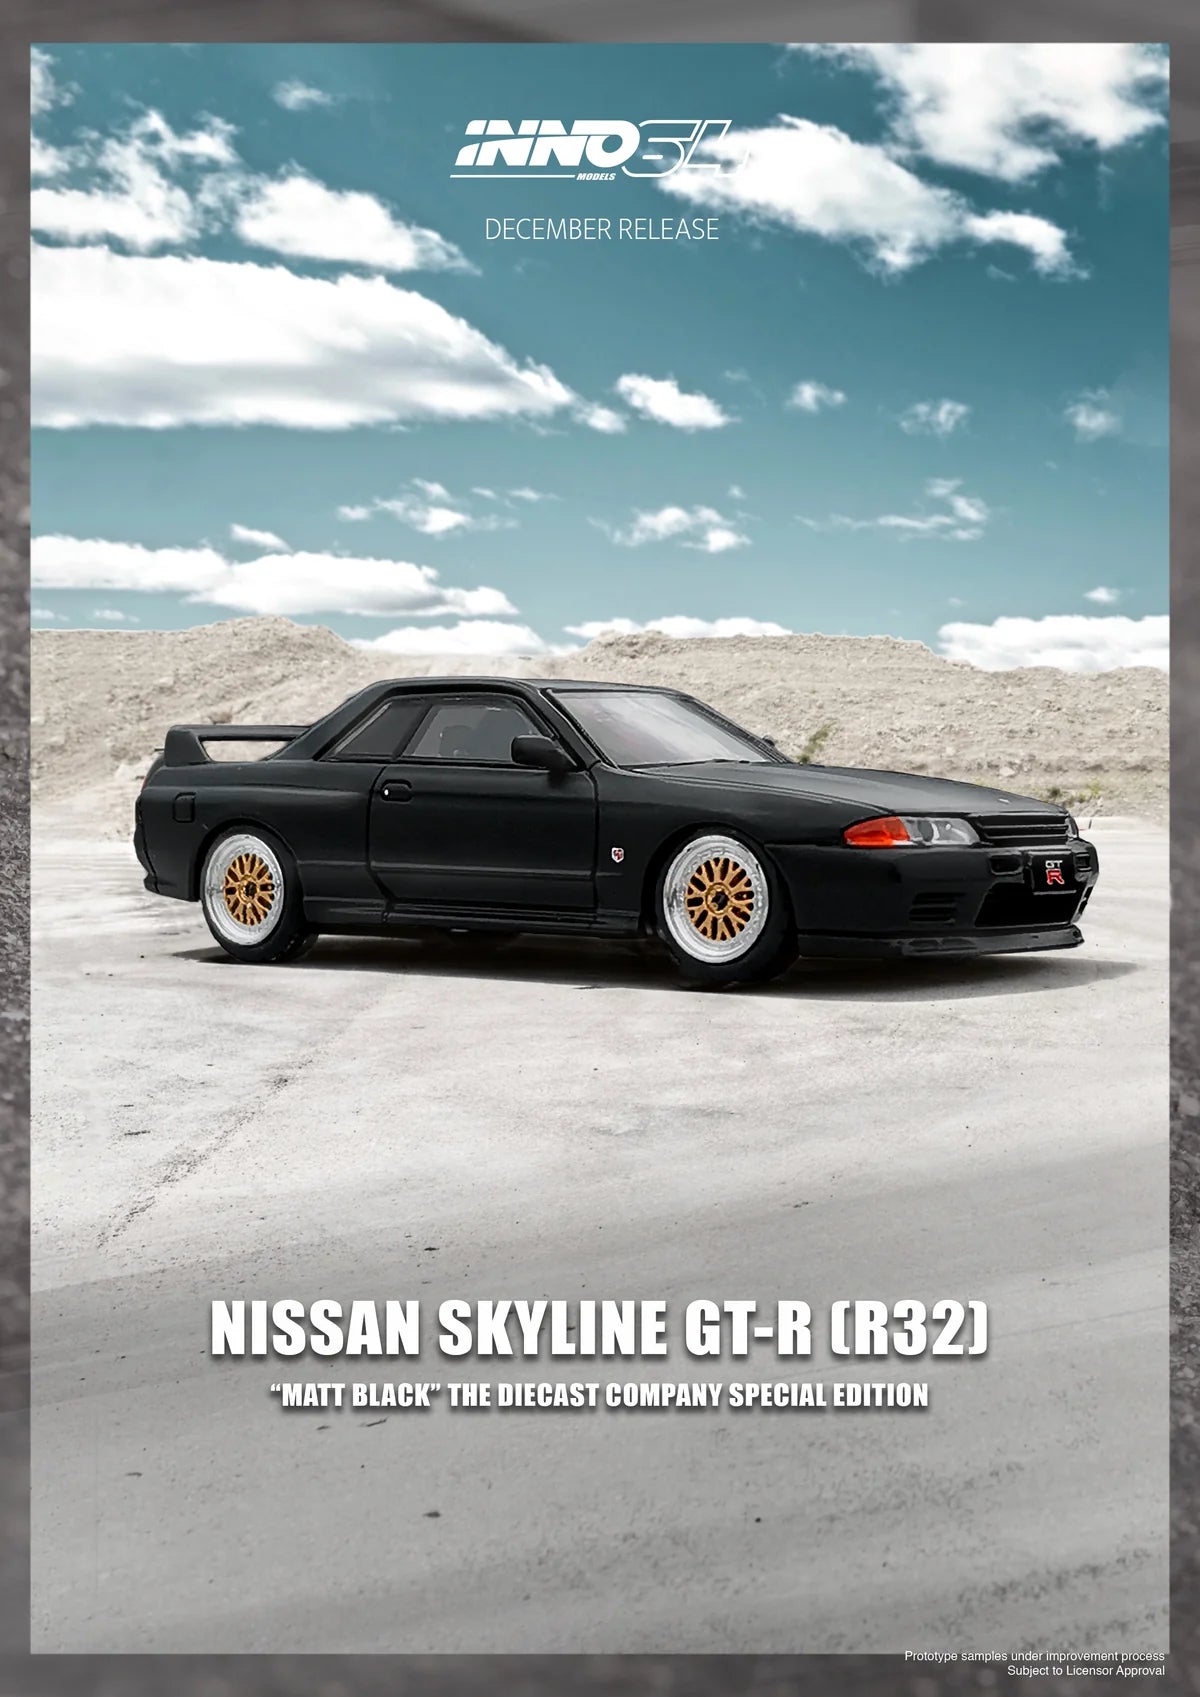 INNO 64 1/64 NISSAN SKYLINE GT-R (R32) Matt Black The Diecast Company Special Edition